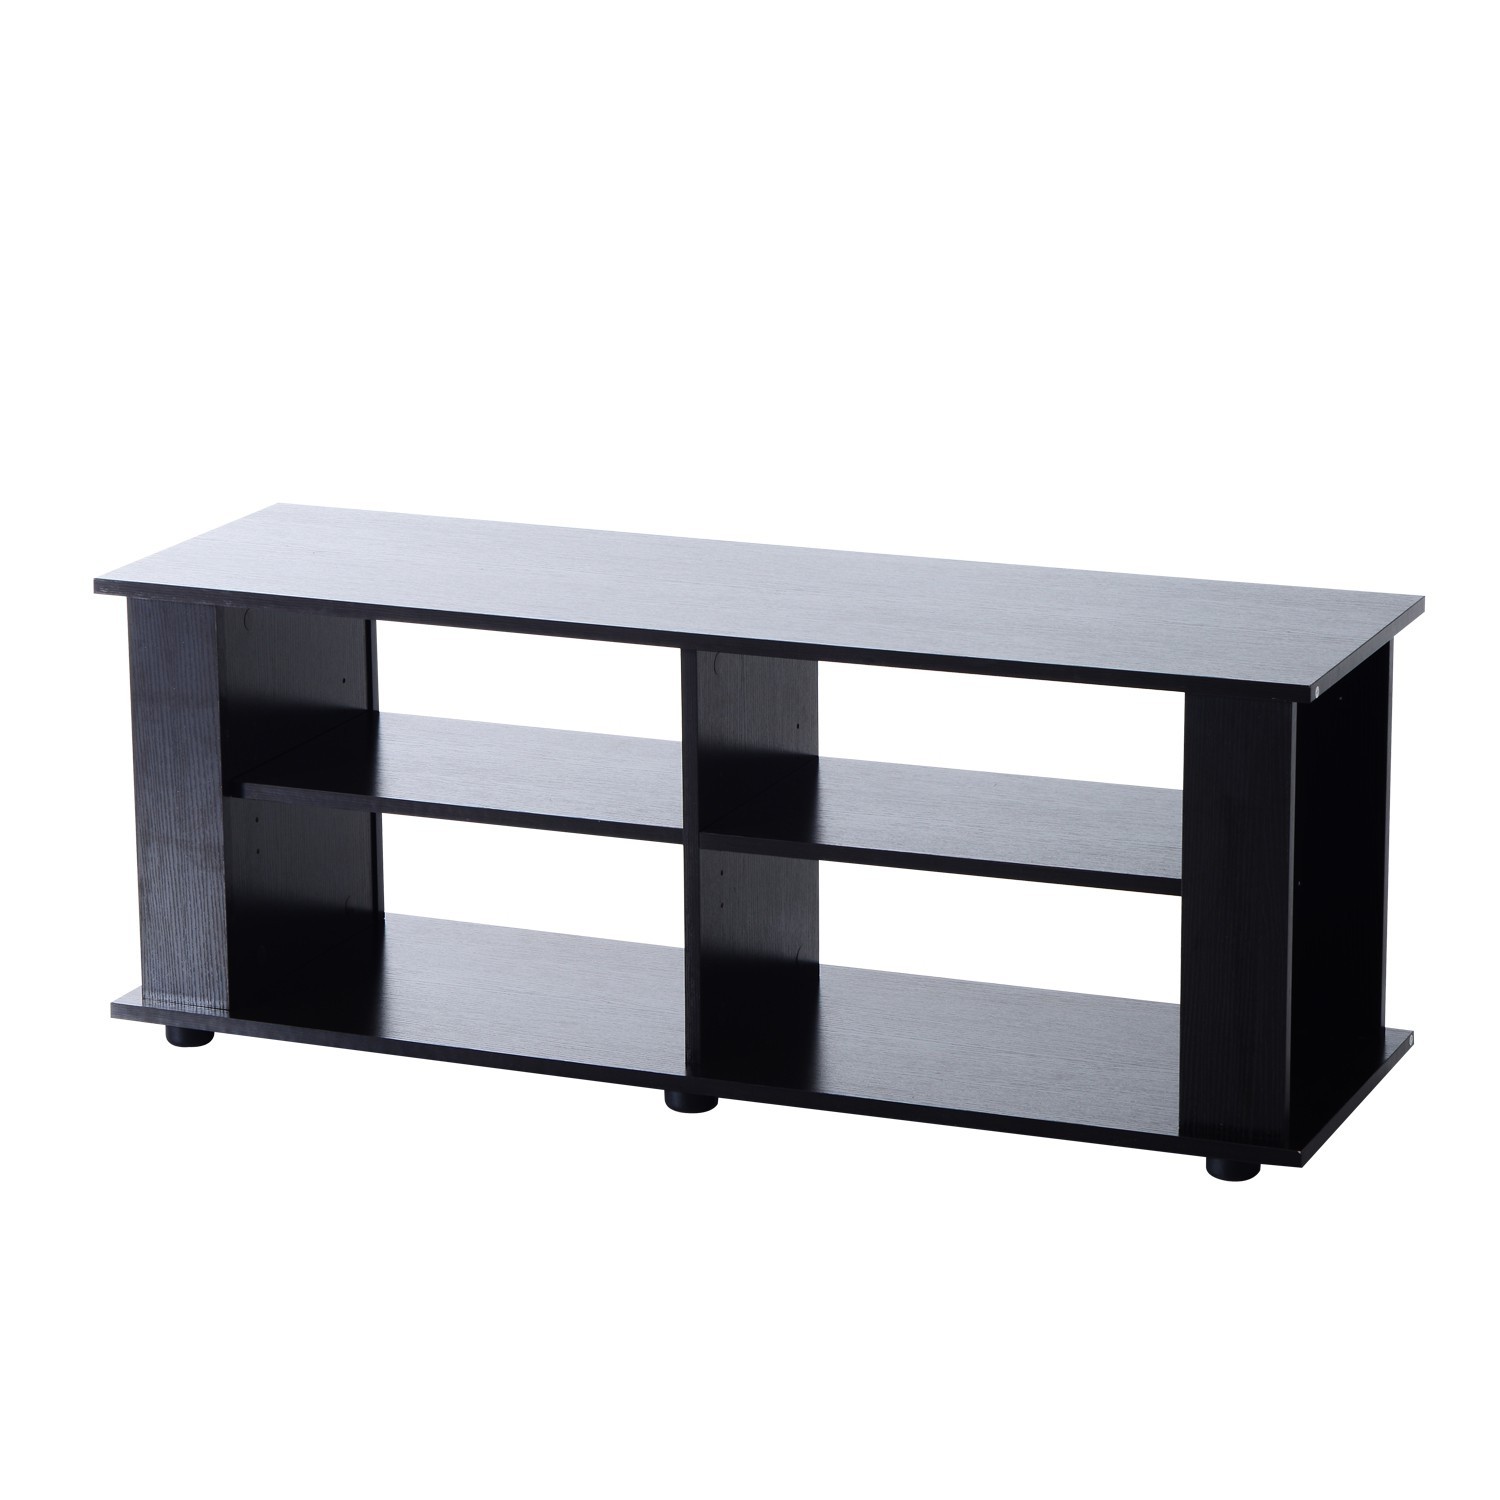 Homcom 58 modern open shelf tv stand black